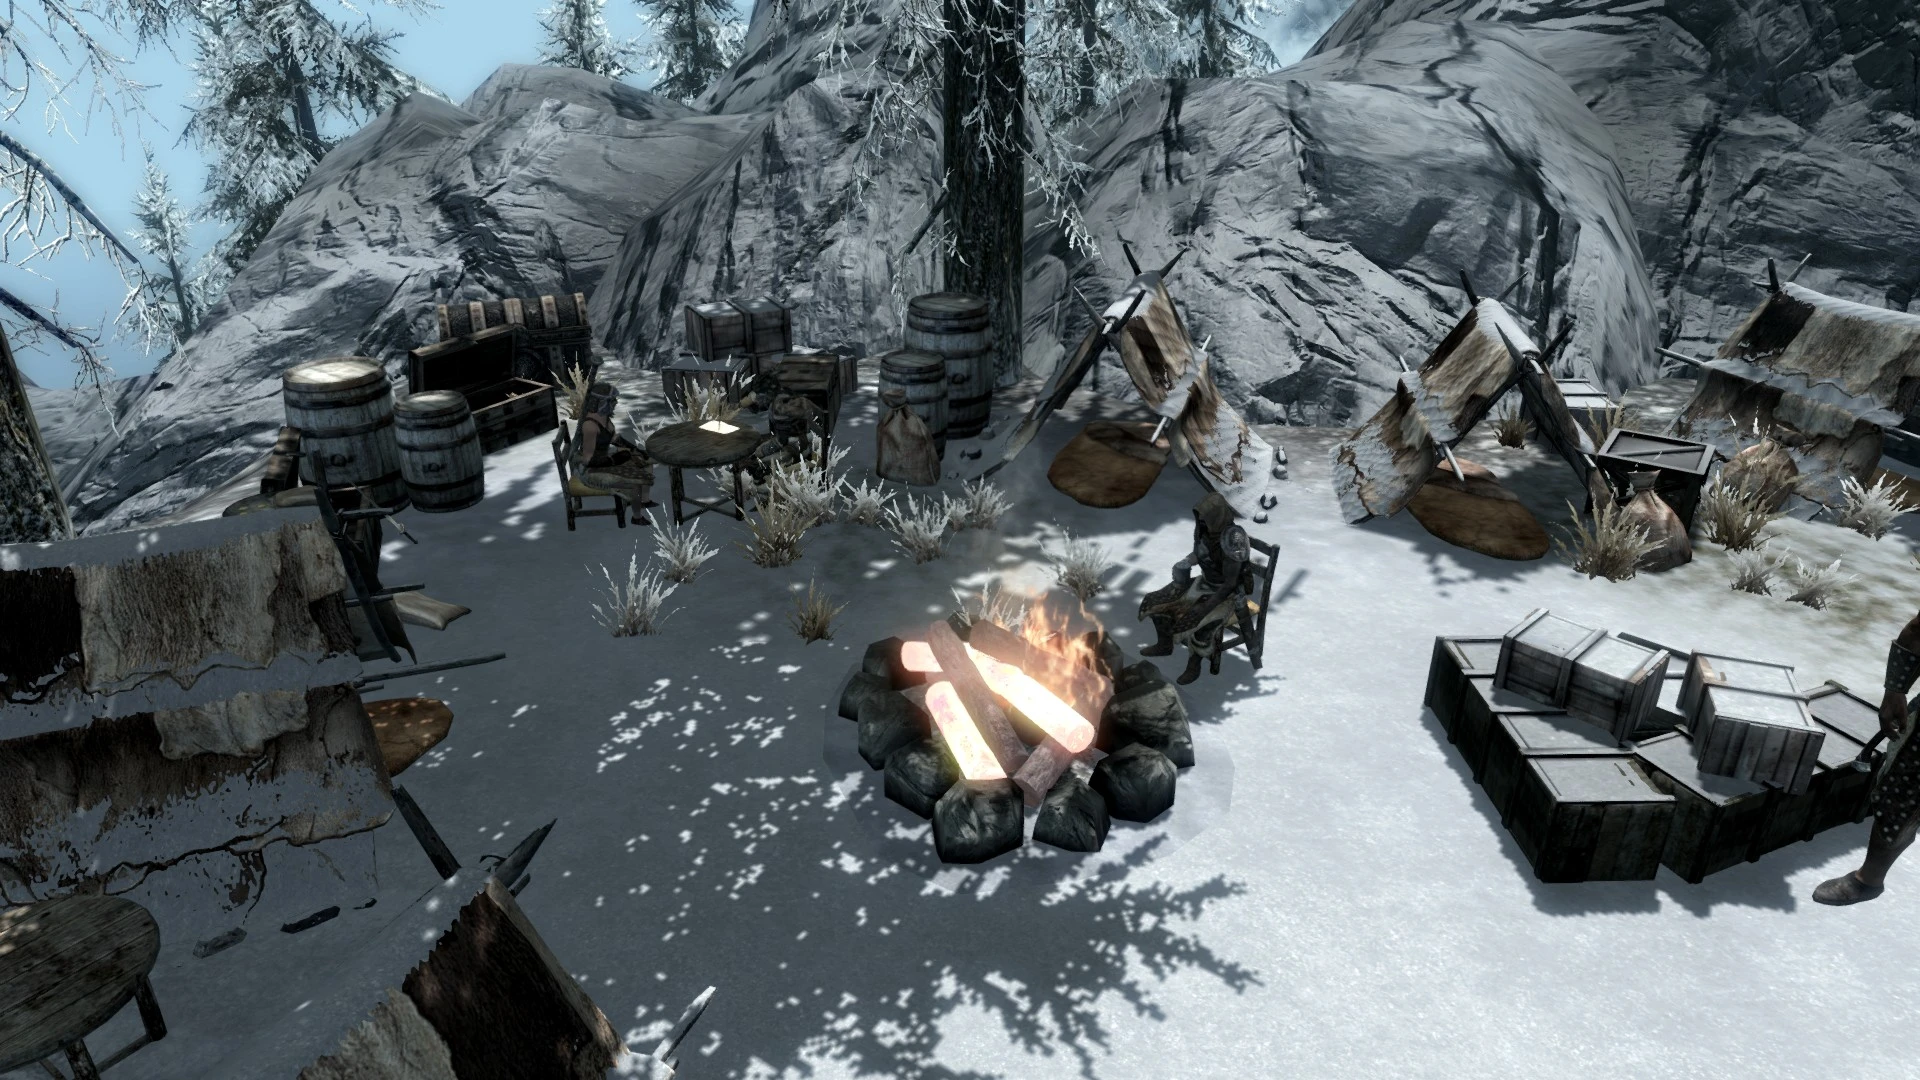 More Bandit Camps at Skyrim Nexus - Mods and Community.